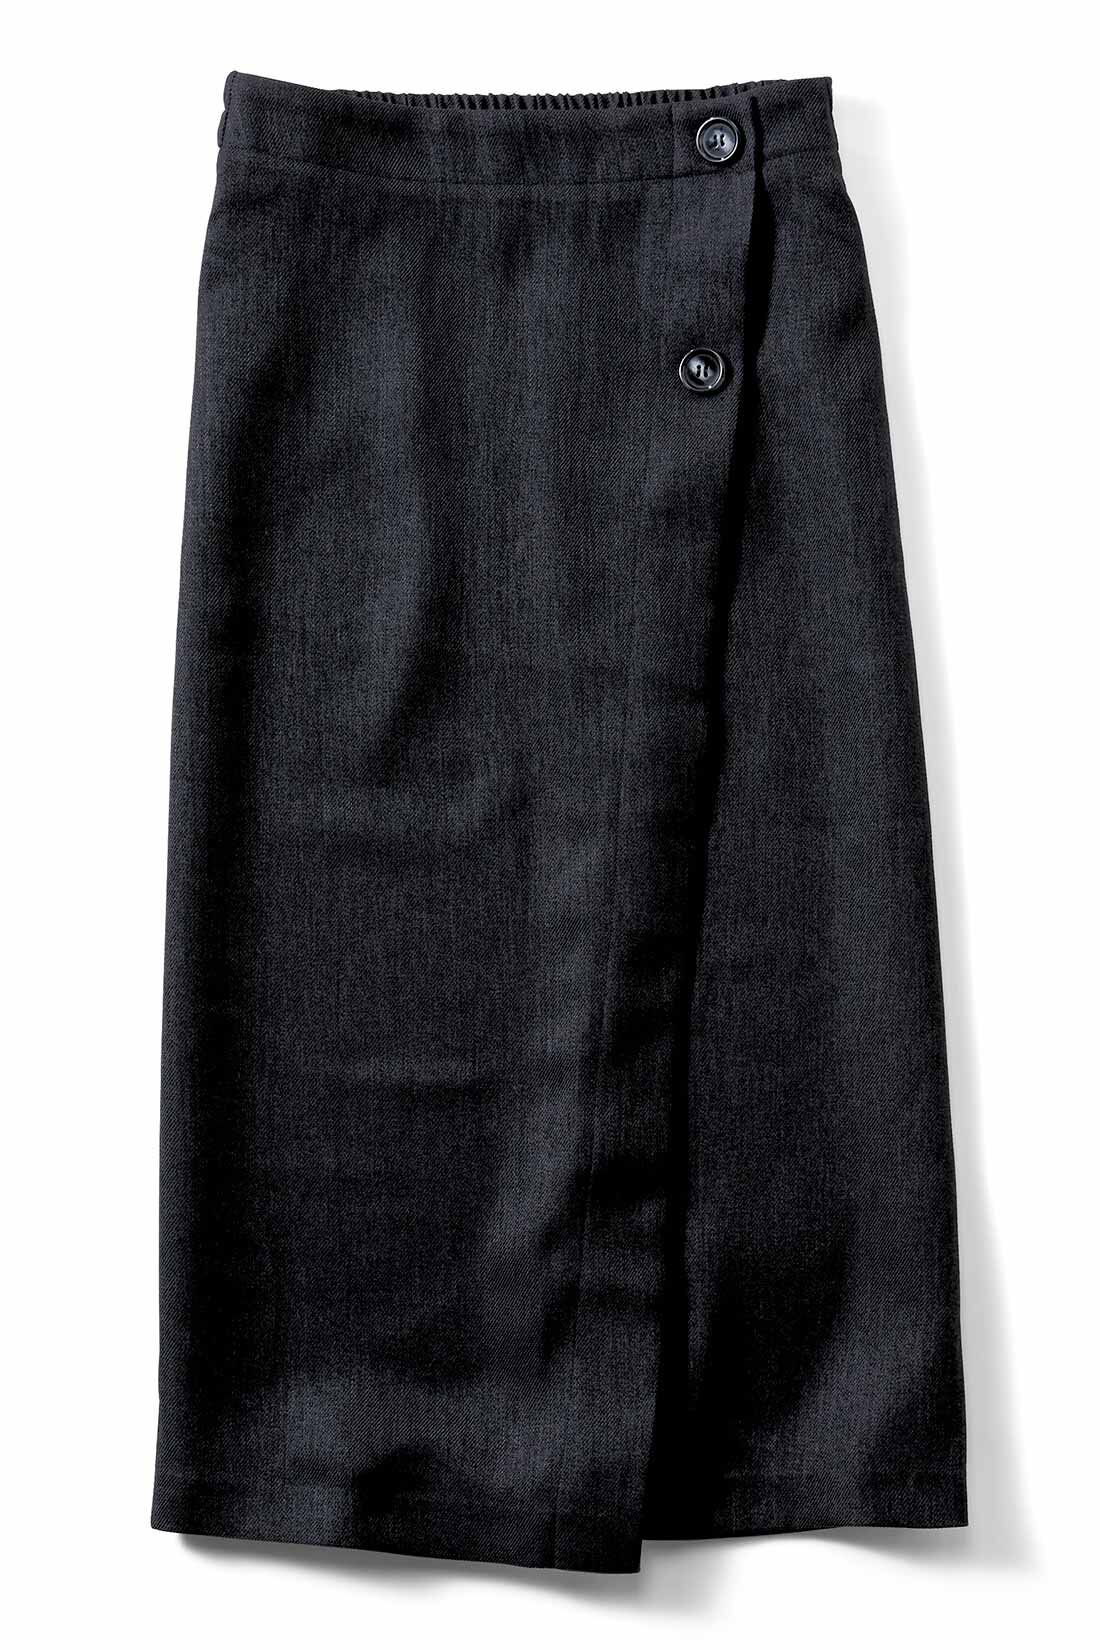 IEDIT|IEDIT[イディット]　ラップ風デザインで着映える 細見えIラインスカート|〈ブラック〉